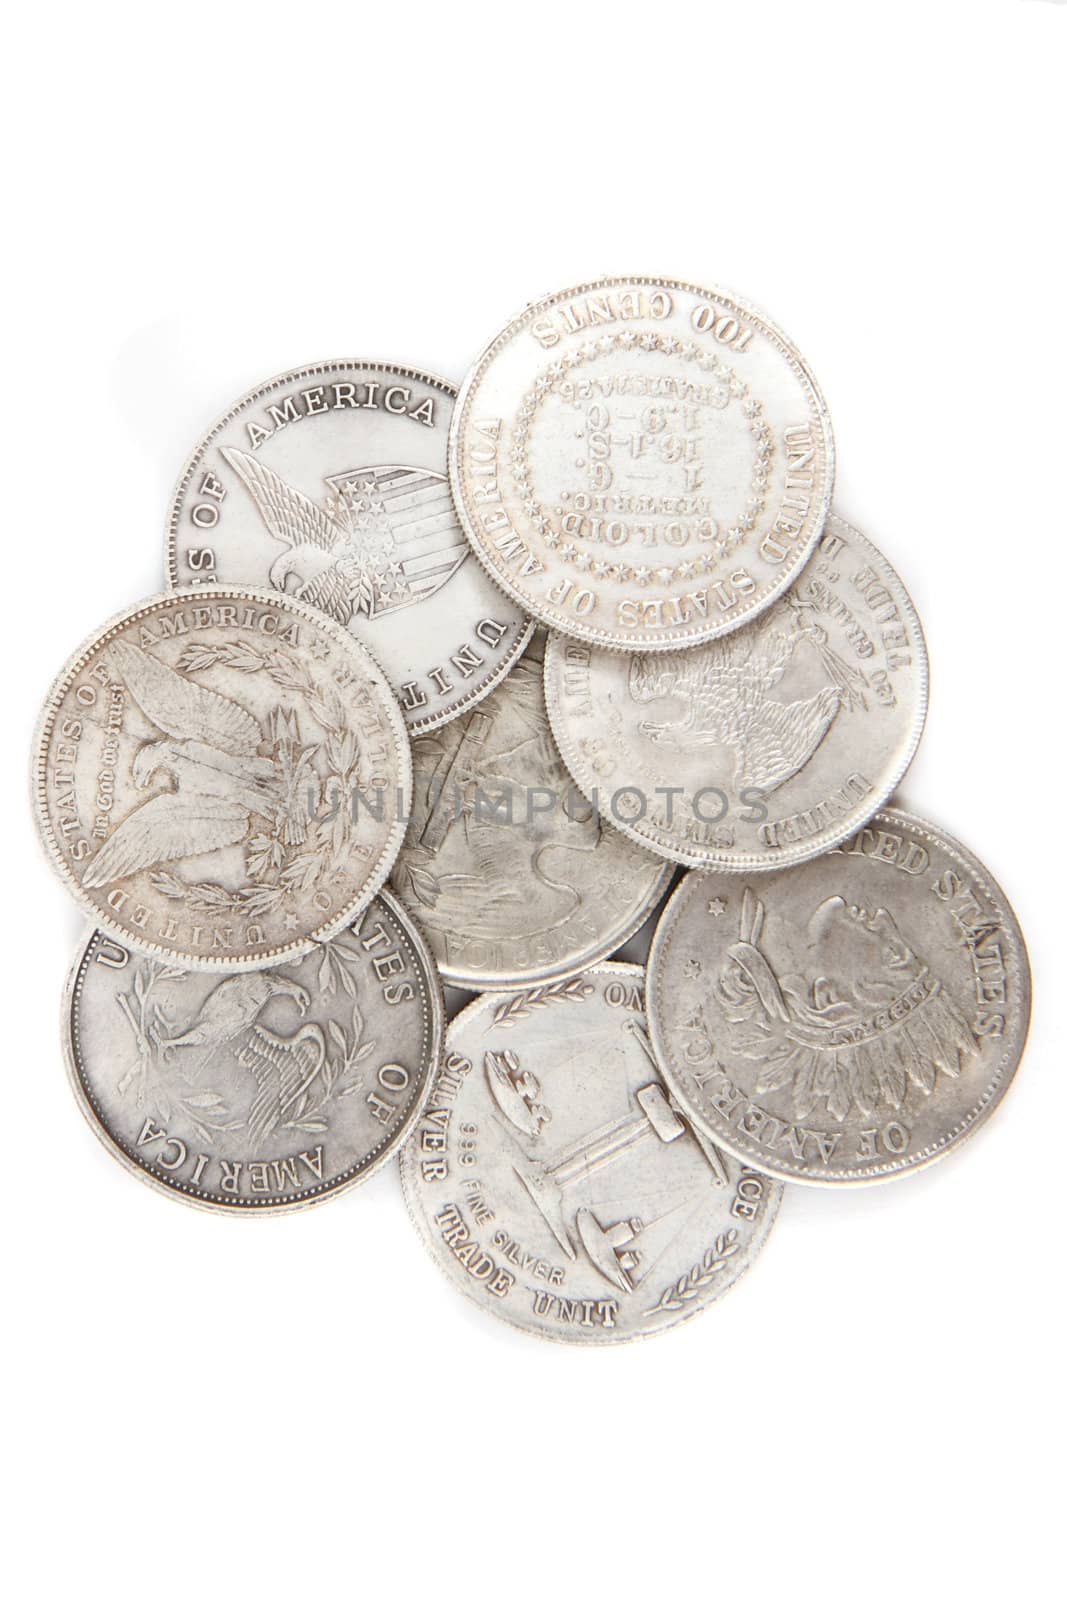 old silver dollars  by jonnysek